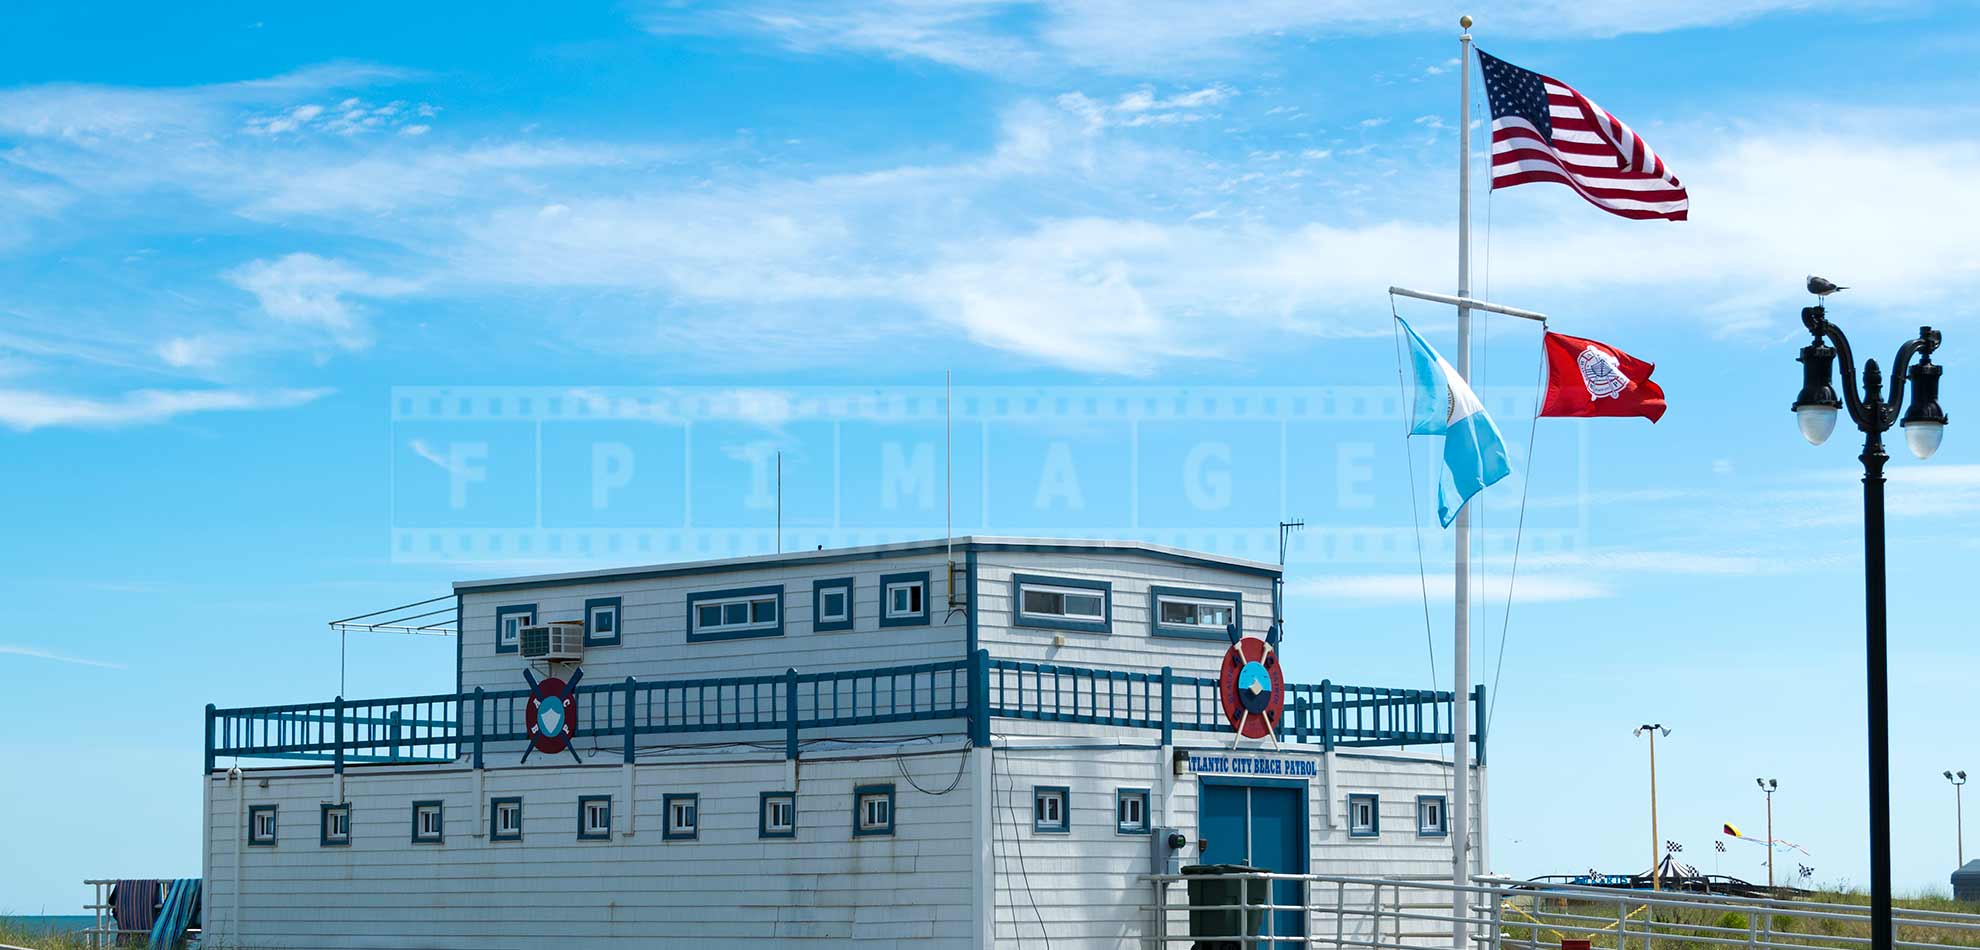 Atlantic City beach patrol building and flags